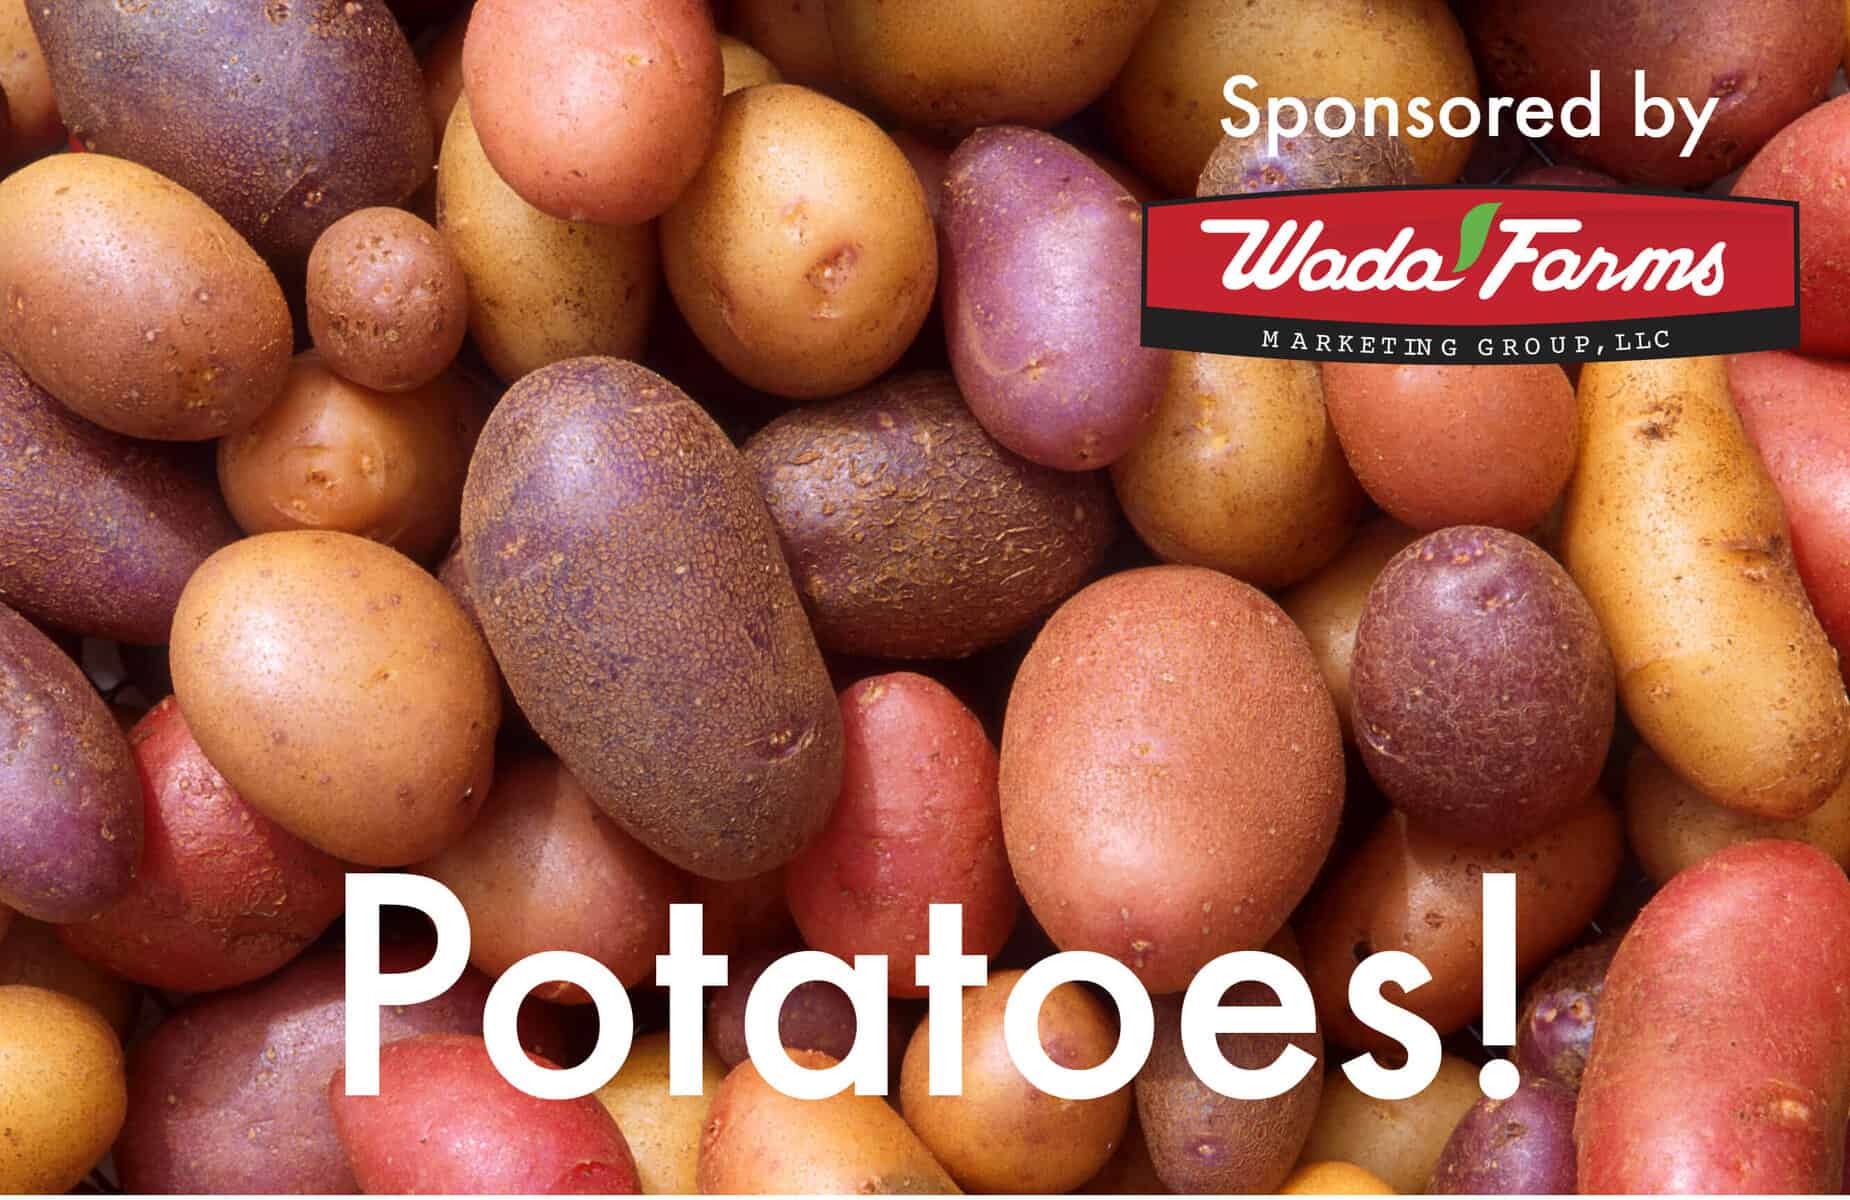 Potatoes, 3 Ways to Cook Wada Farm's Smalls